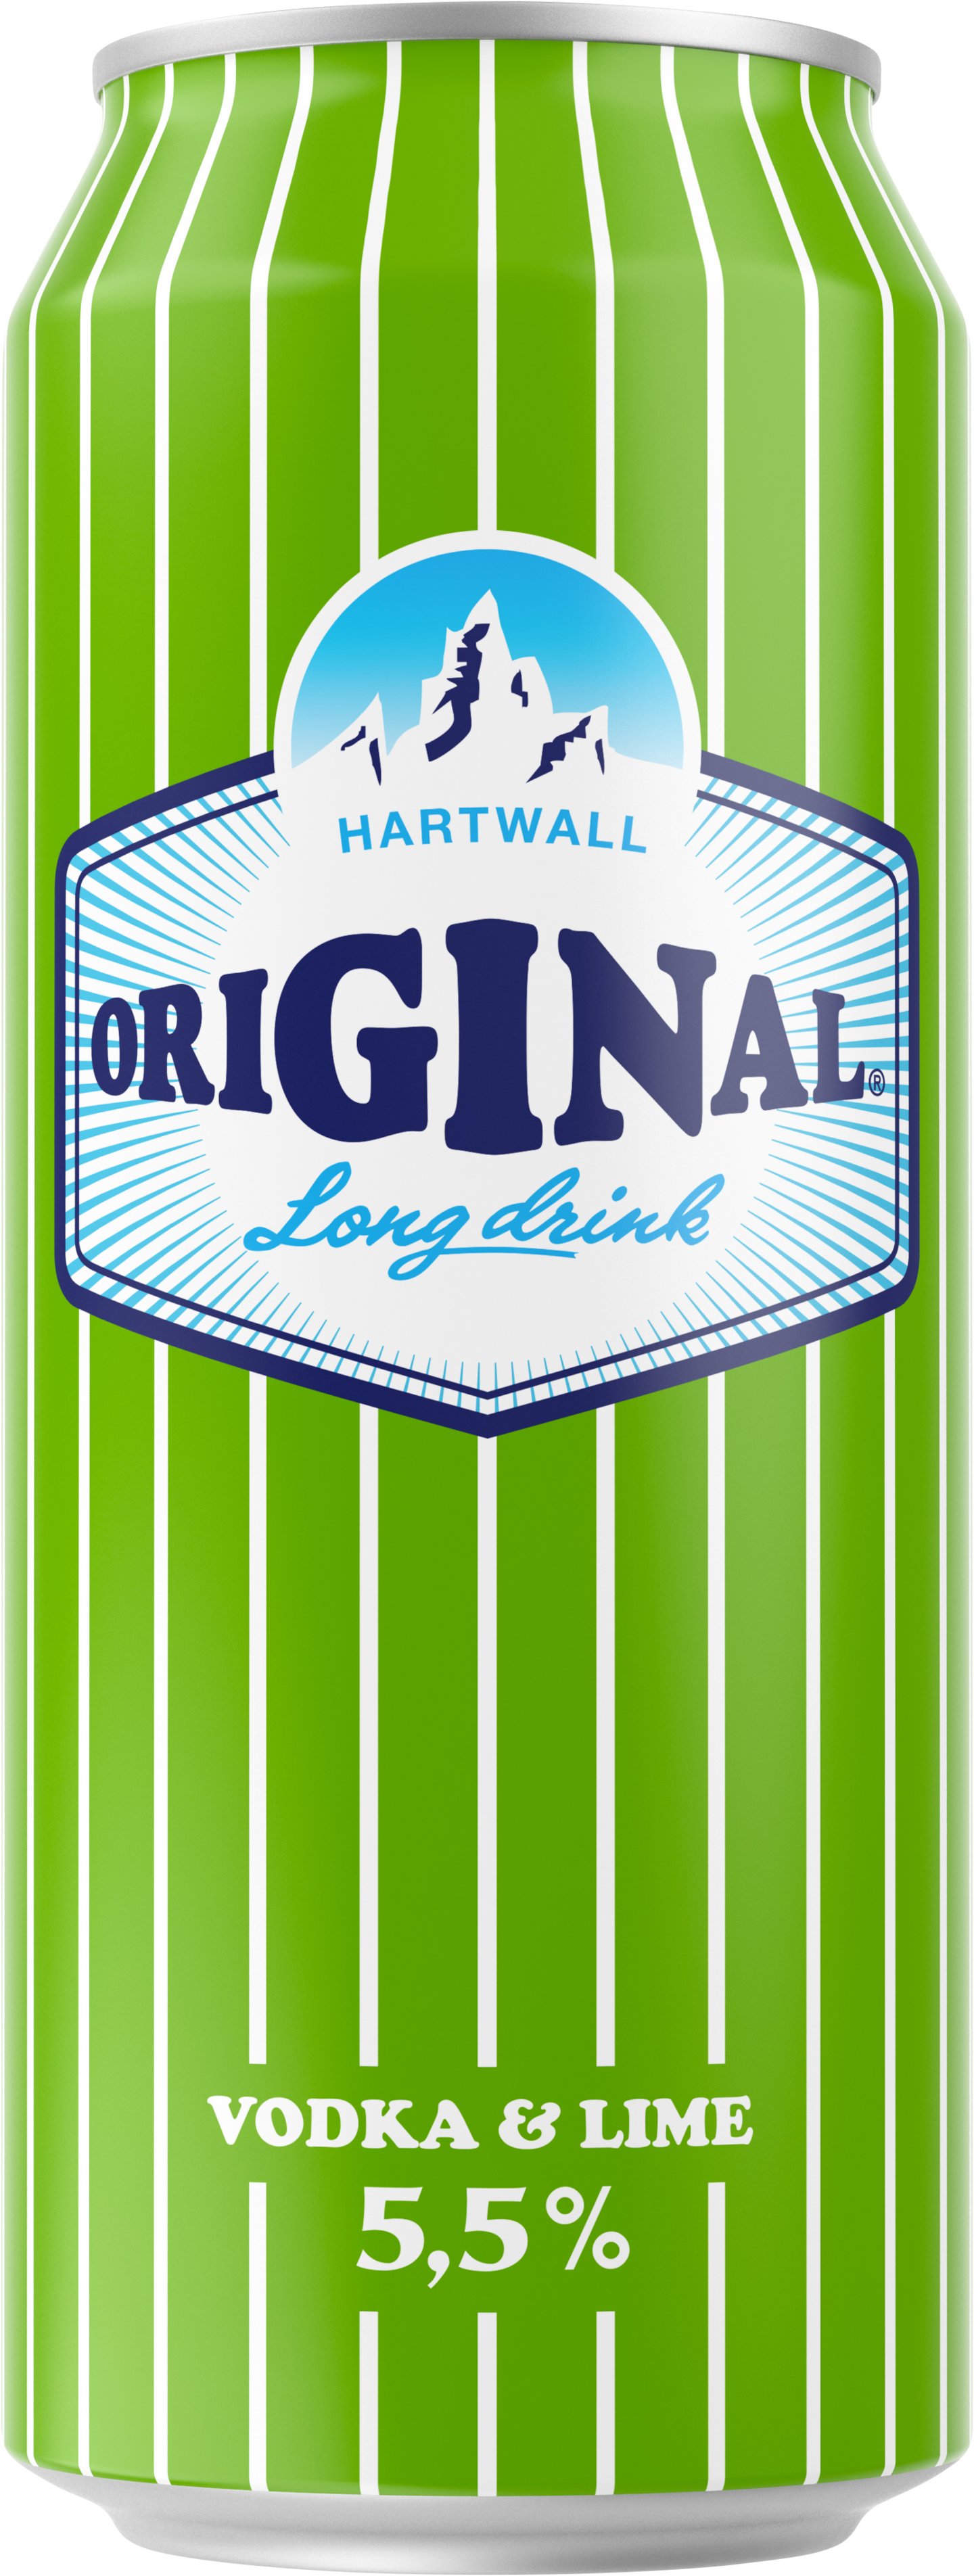 Hartwall Original Long Drink Vodka-Lime 5,5% 0,5l